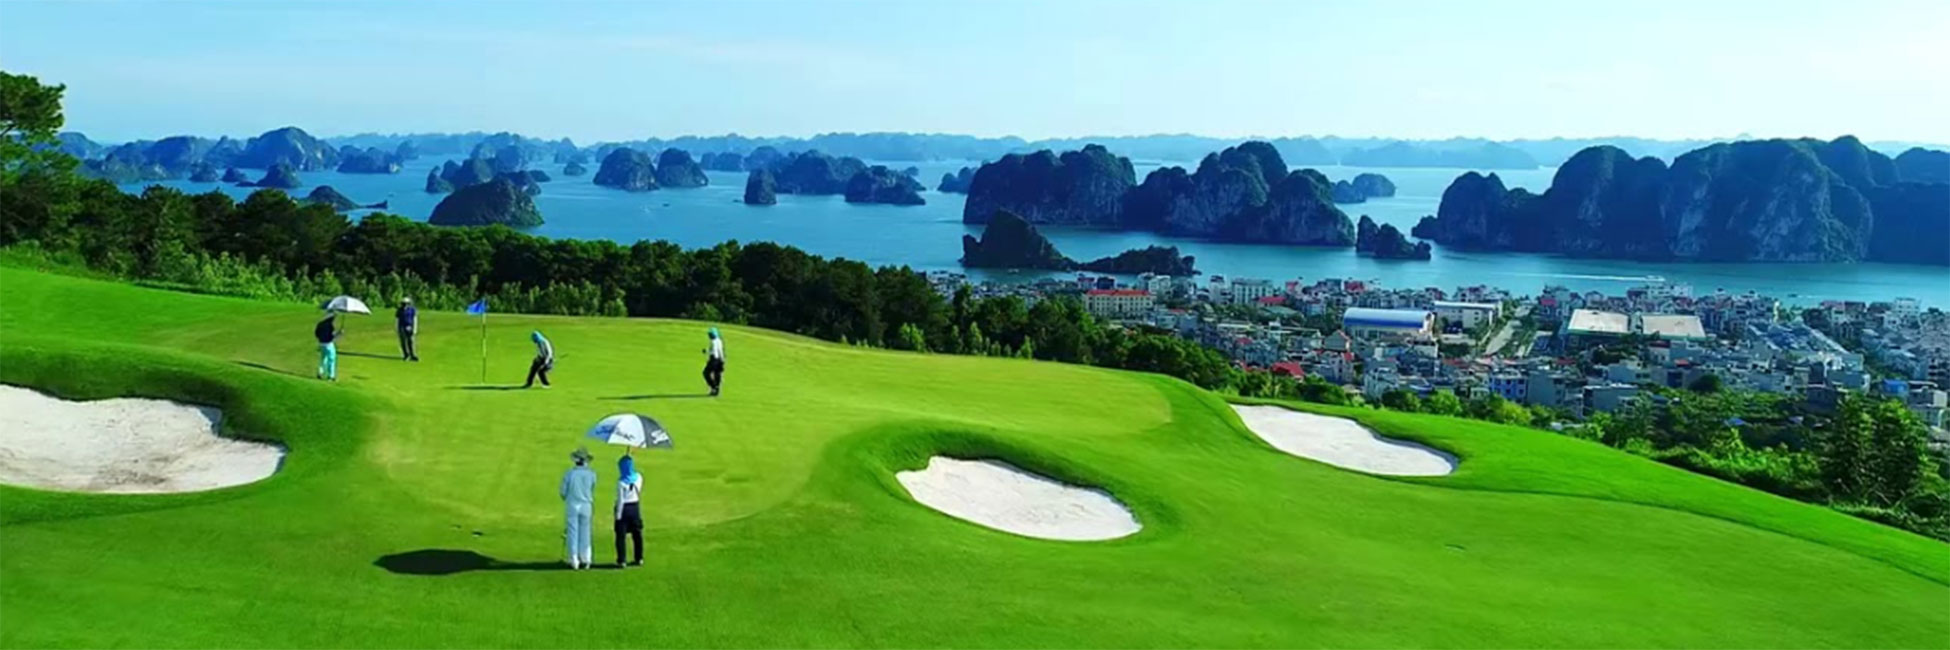 Halong Bay Golf Courses